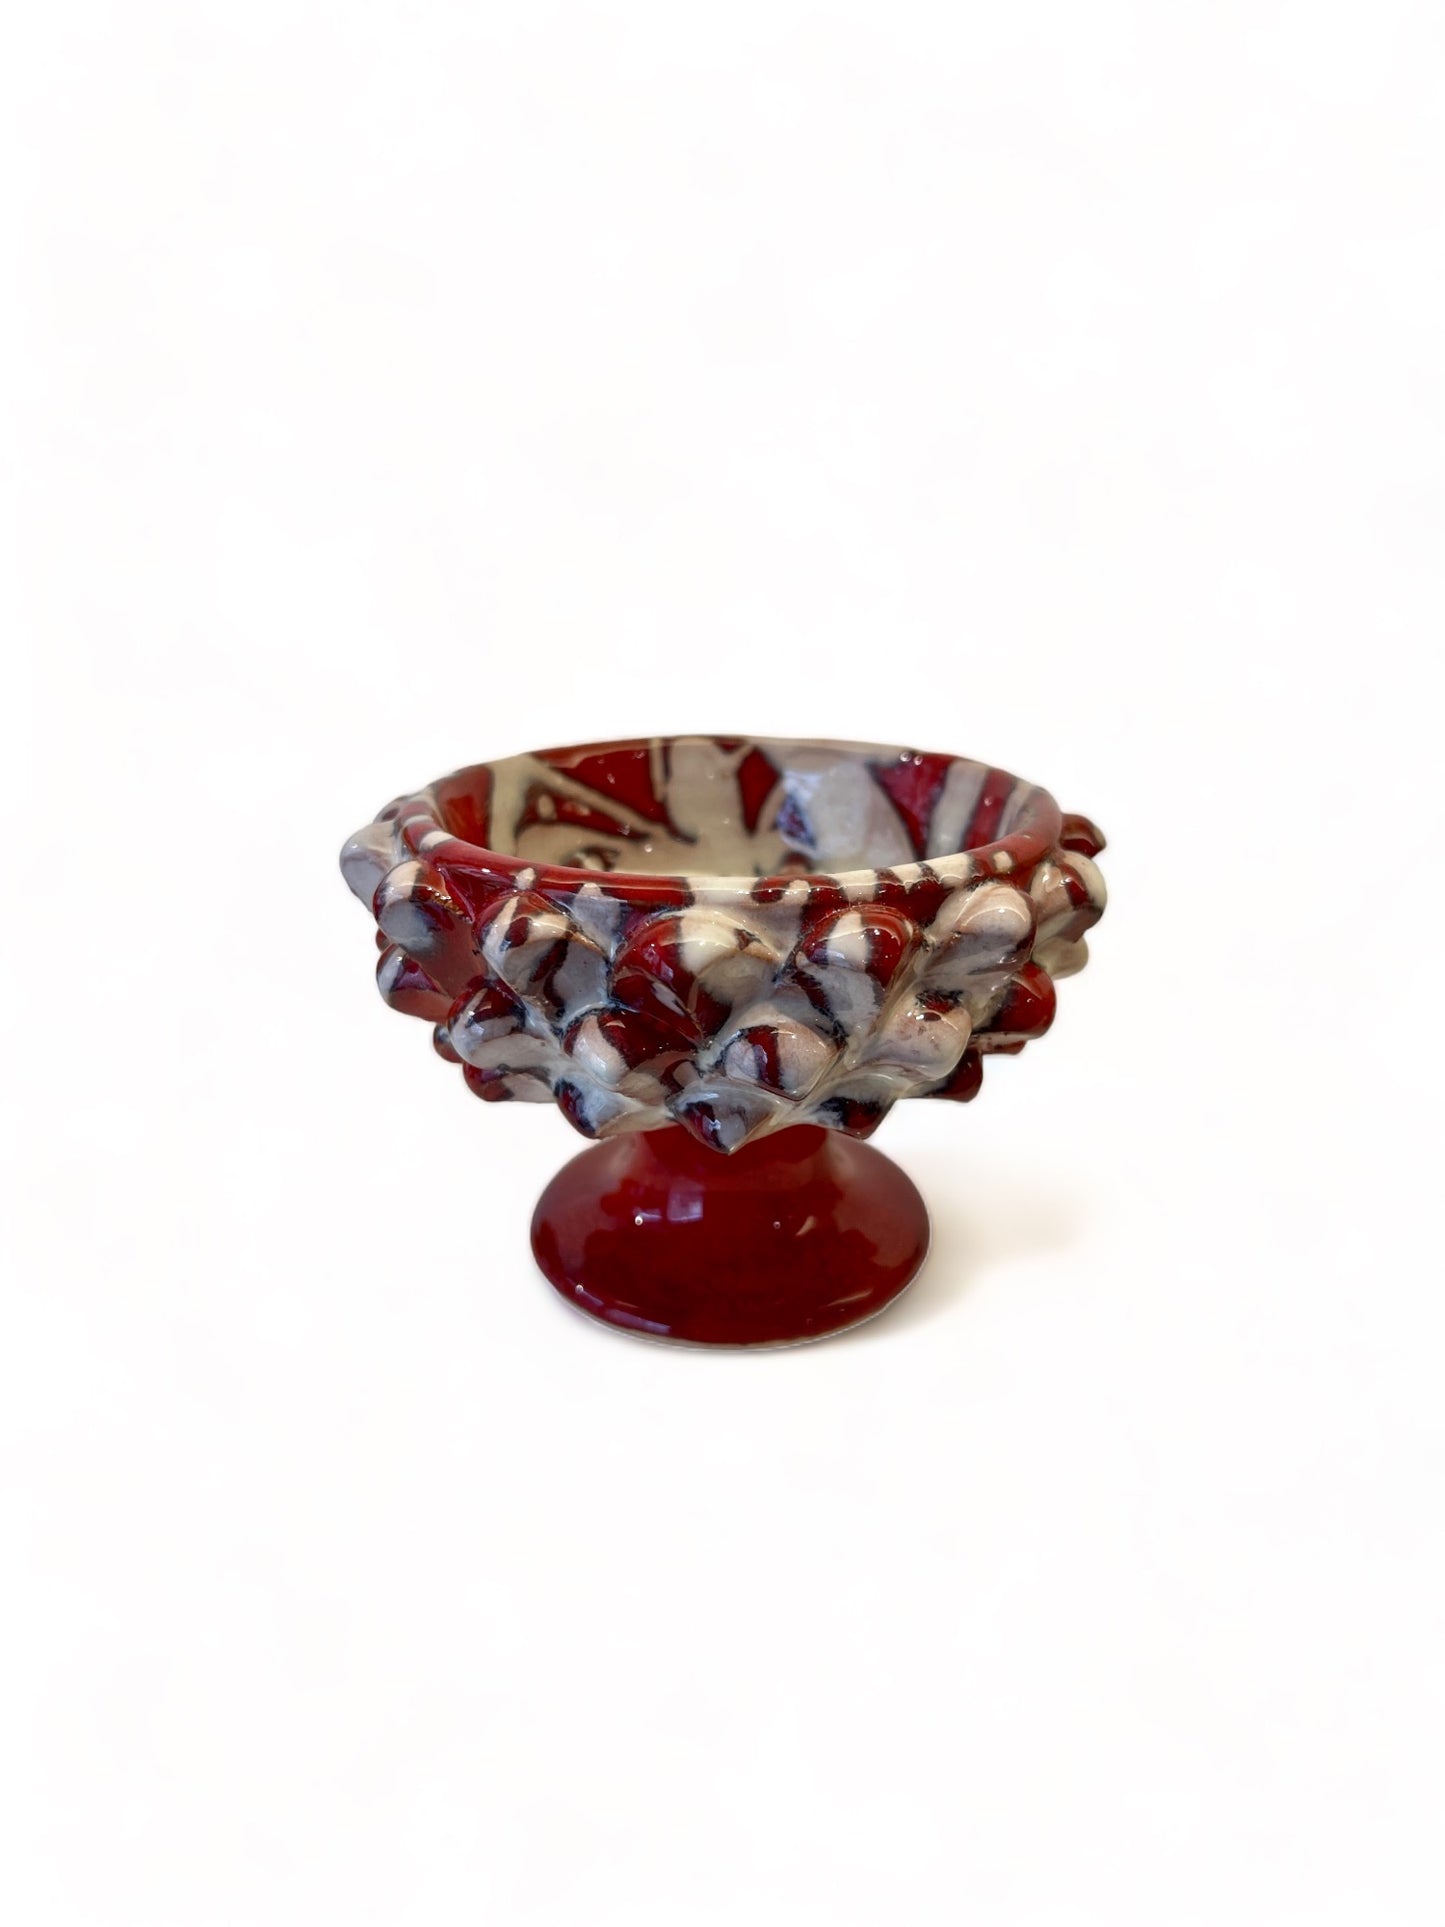 Mini Sicilian Pine Cone Pedestal Bowl, 7 cm